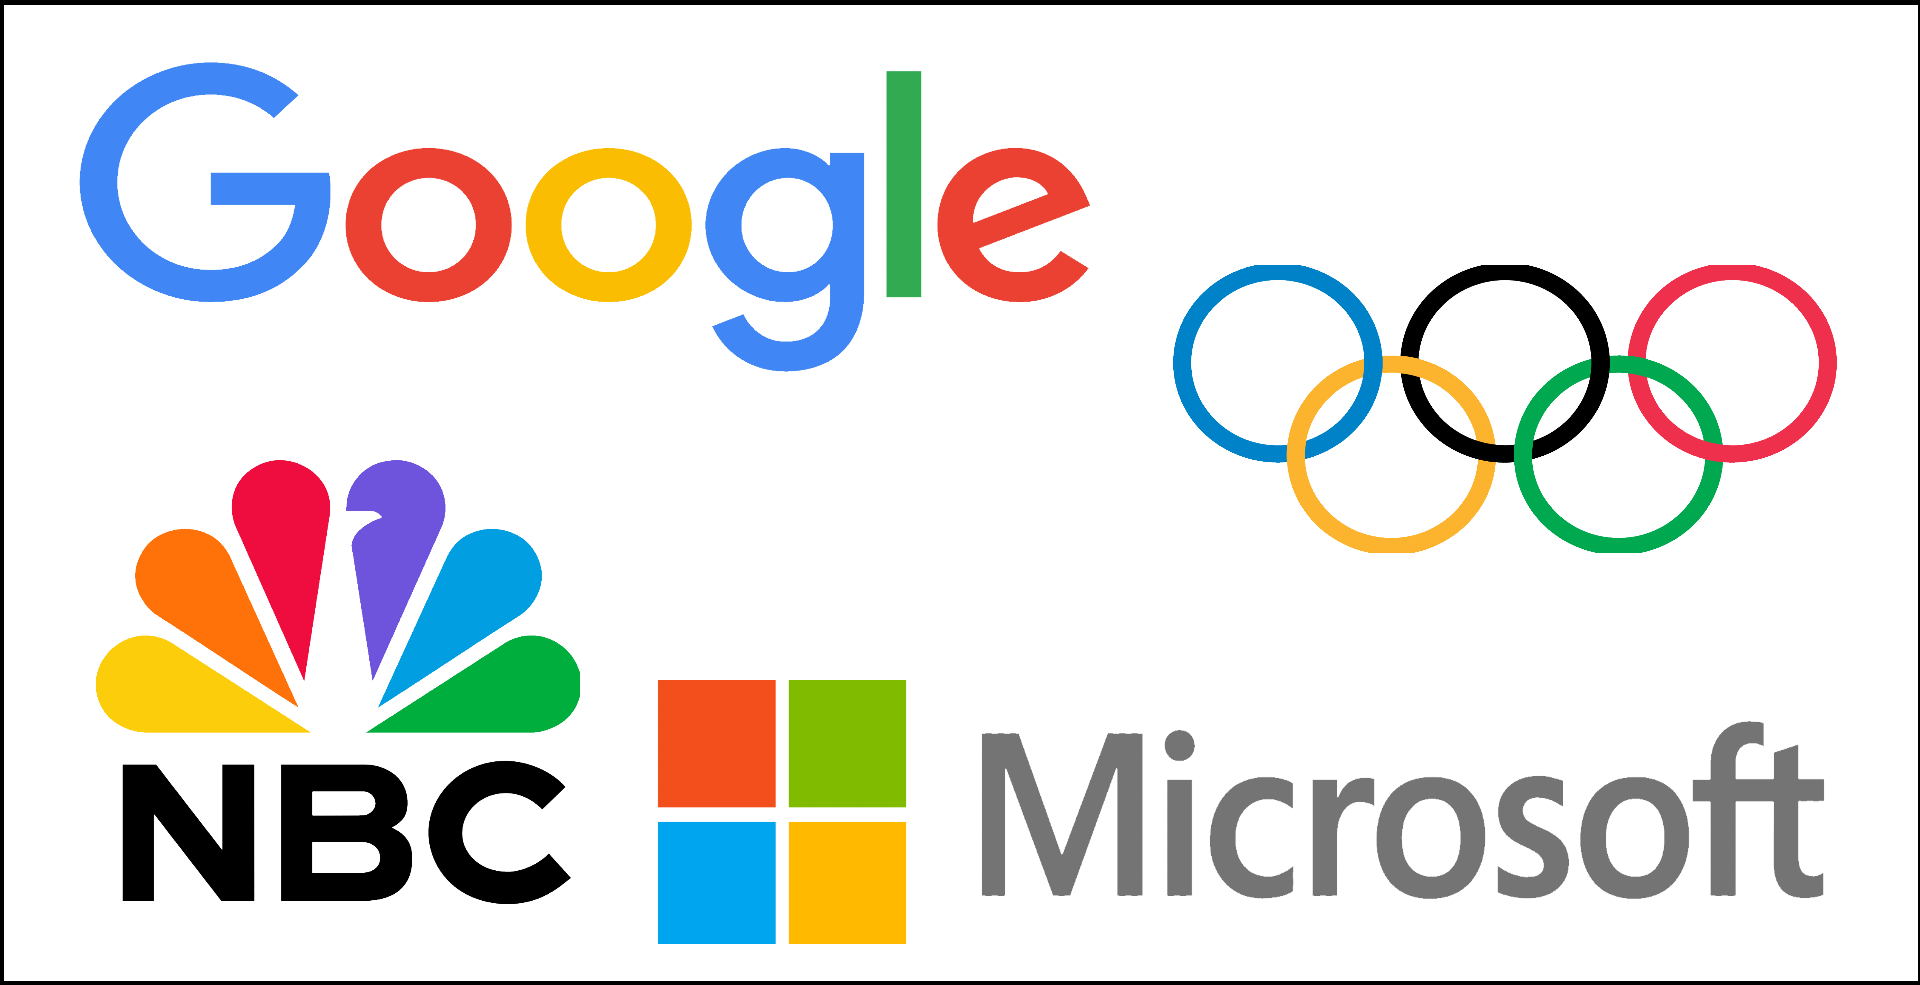 Sampling of multicolored logos